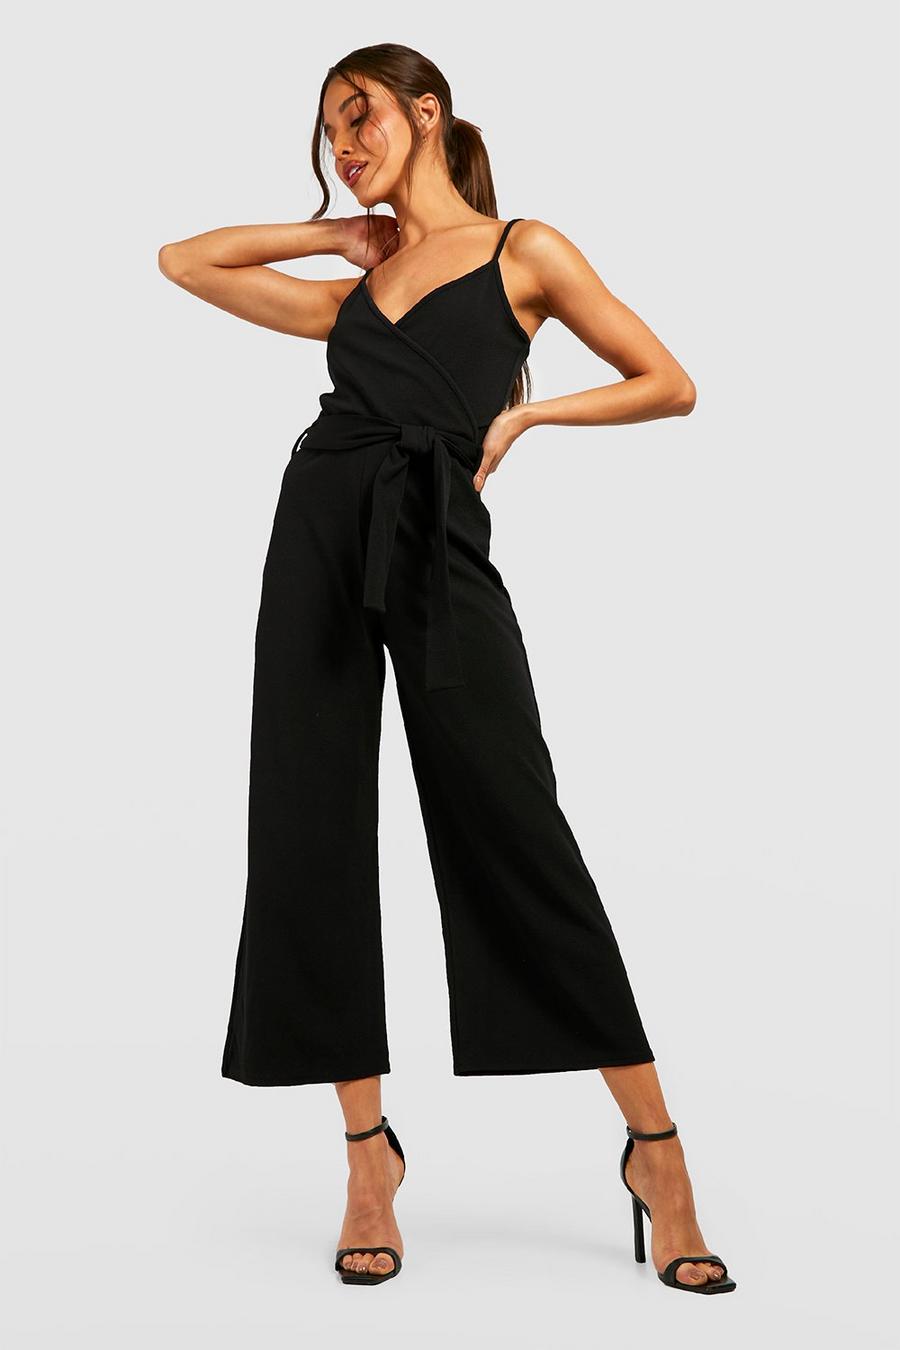 Black Basic Cami Style Wrap Jumpsuit